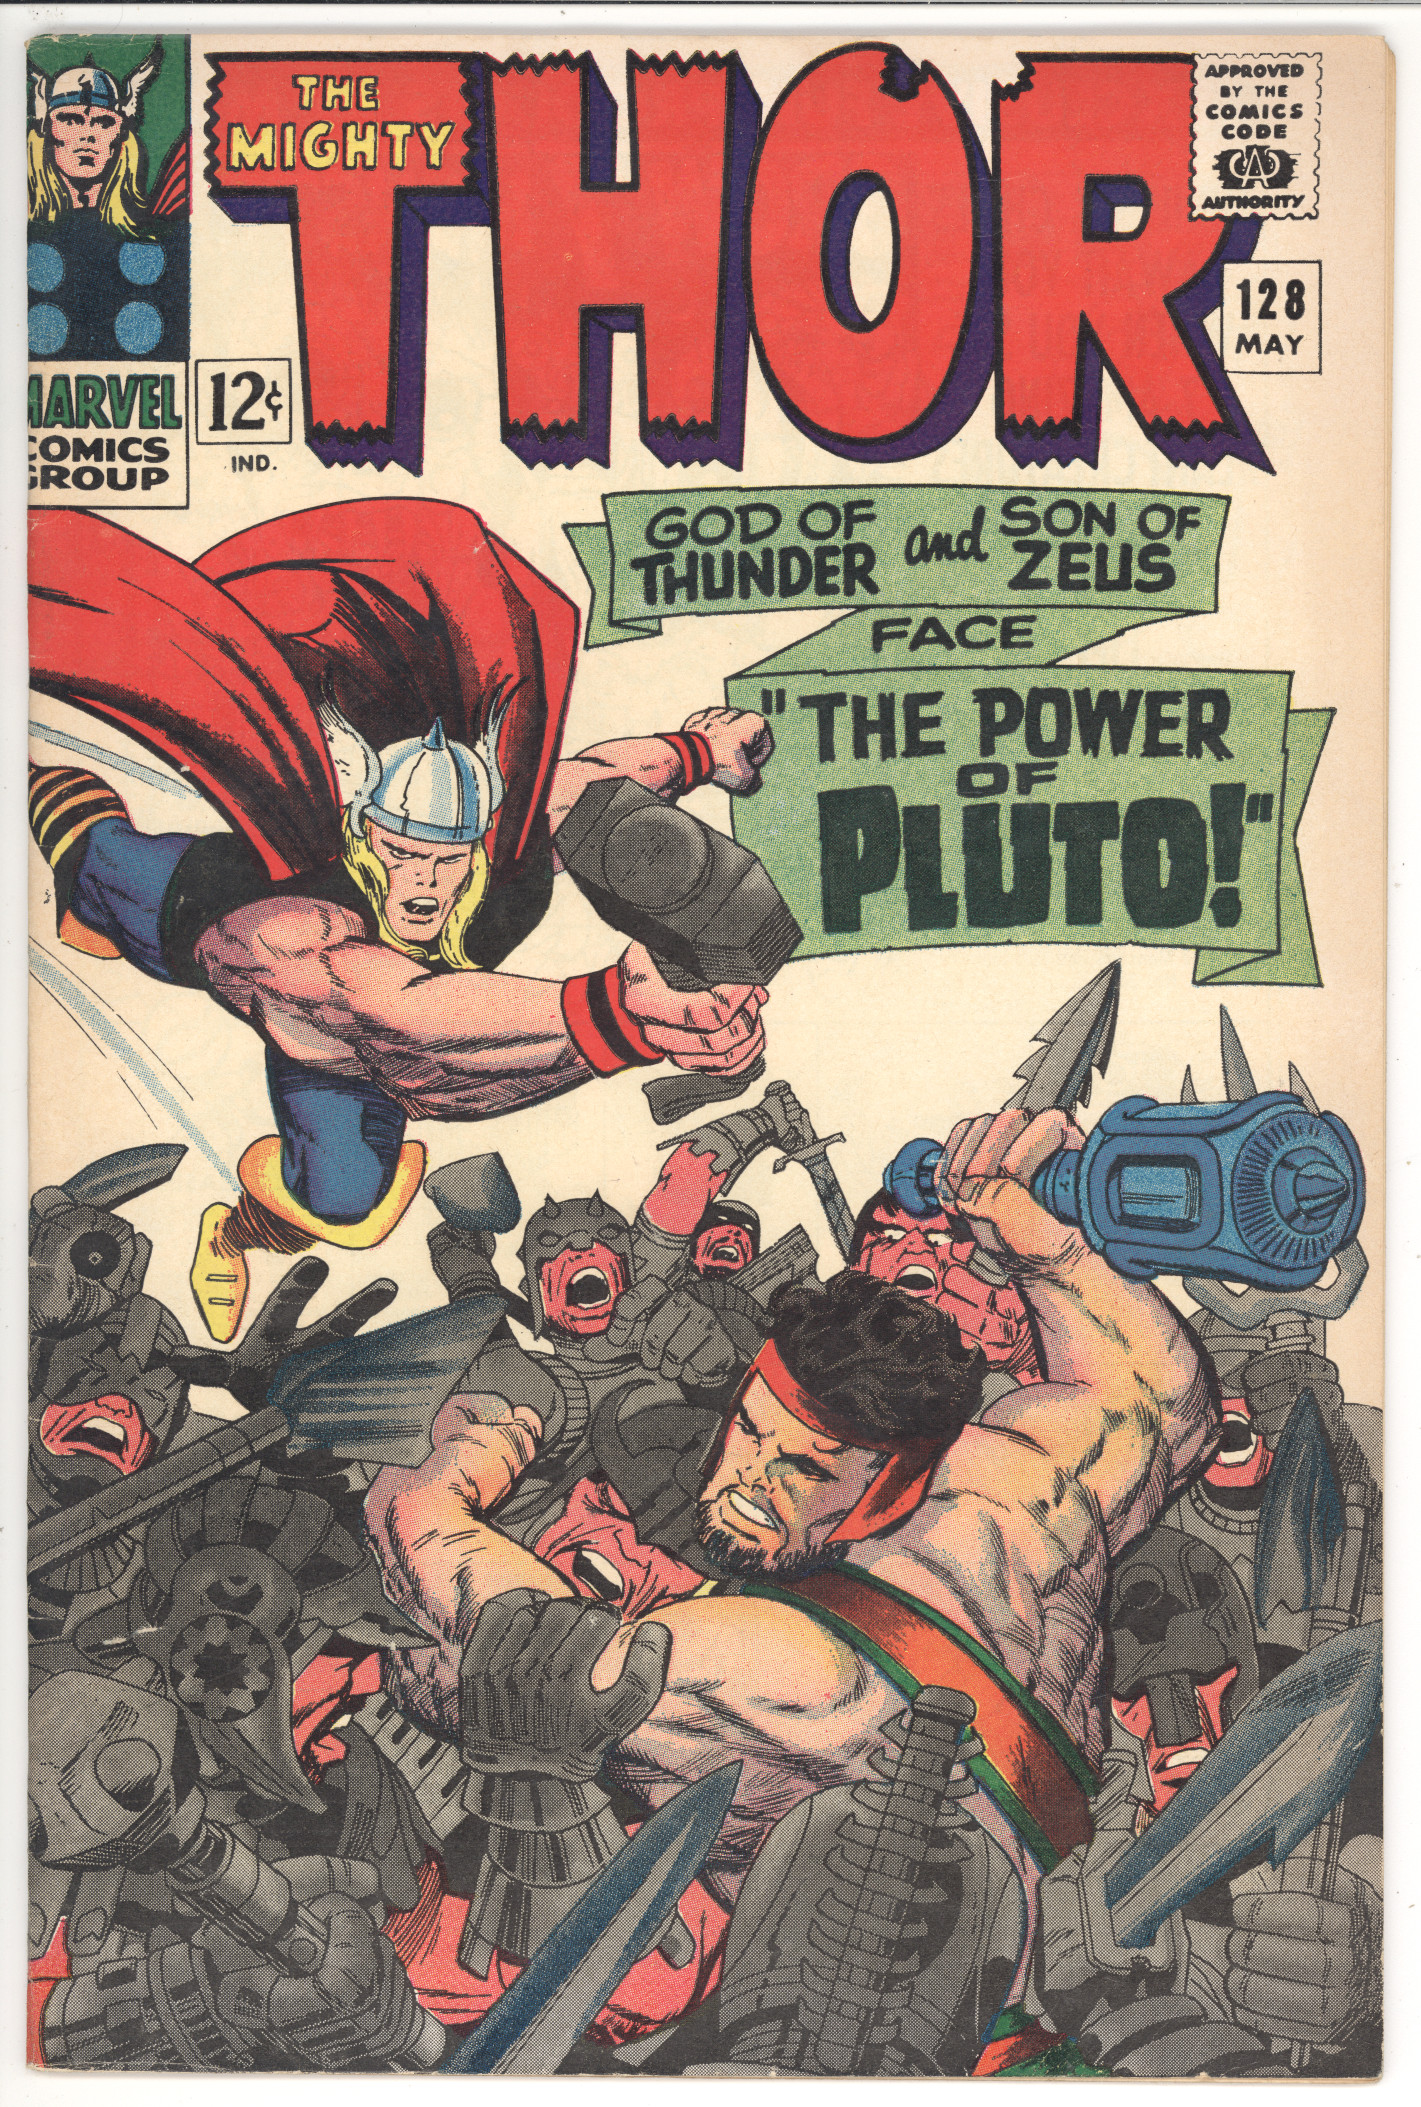 Thor #128